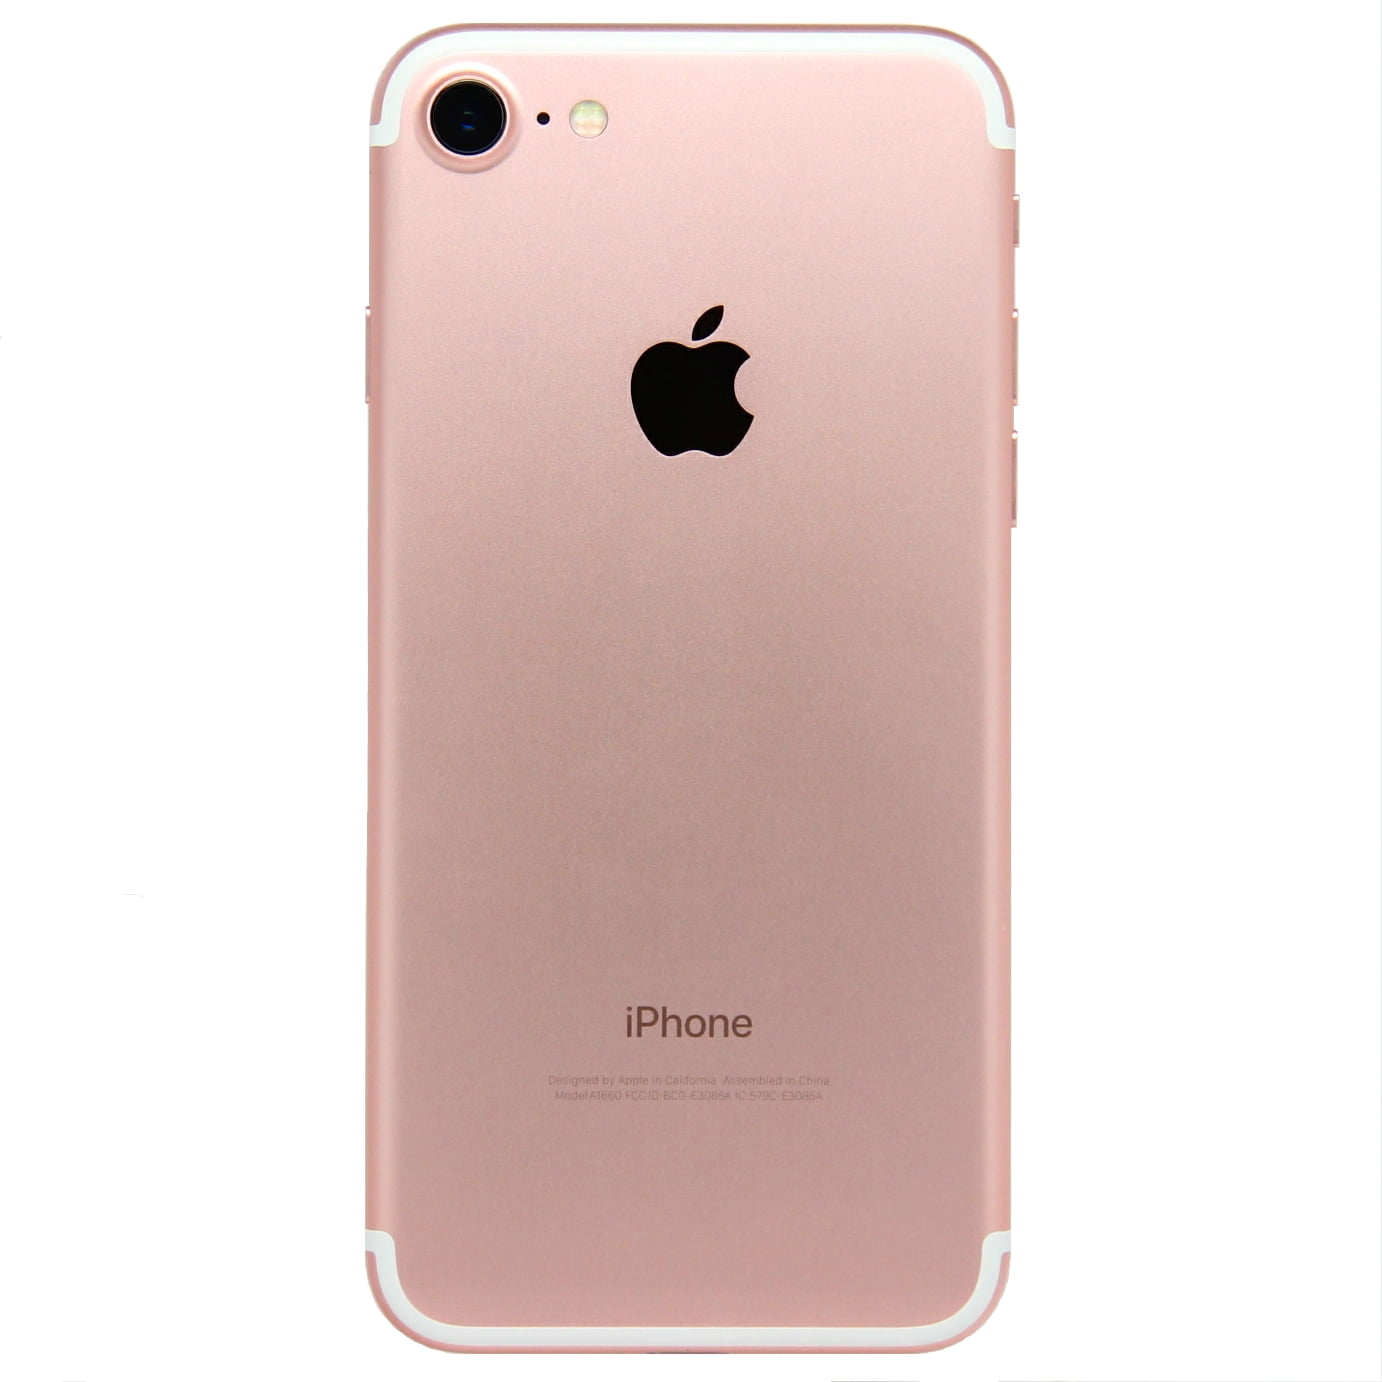 Refurbished Apple iPhone 7 128GB, Rose Gold - Unlocked GSM - Walmart.com